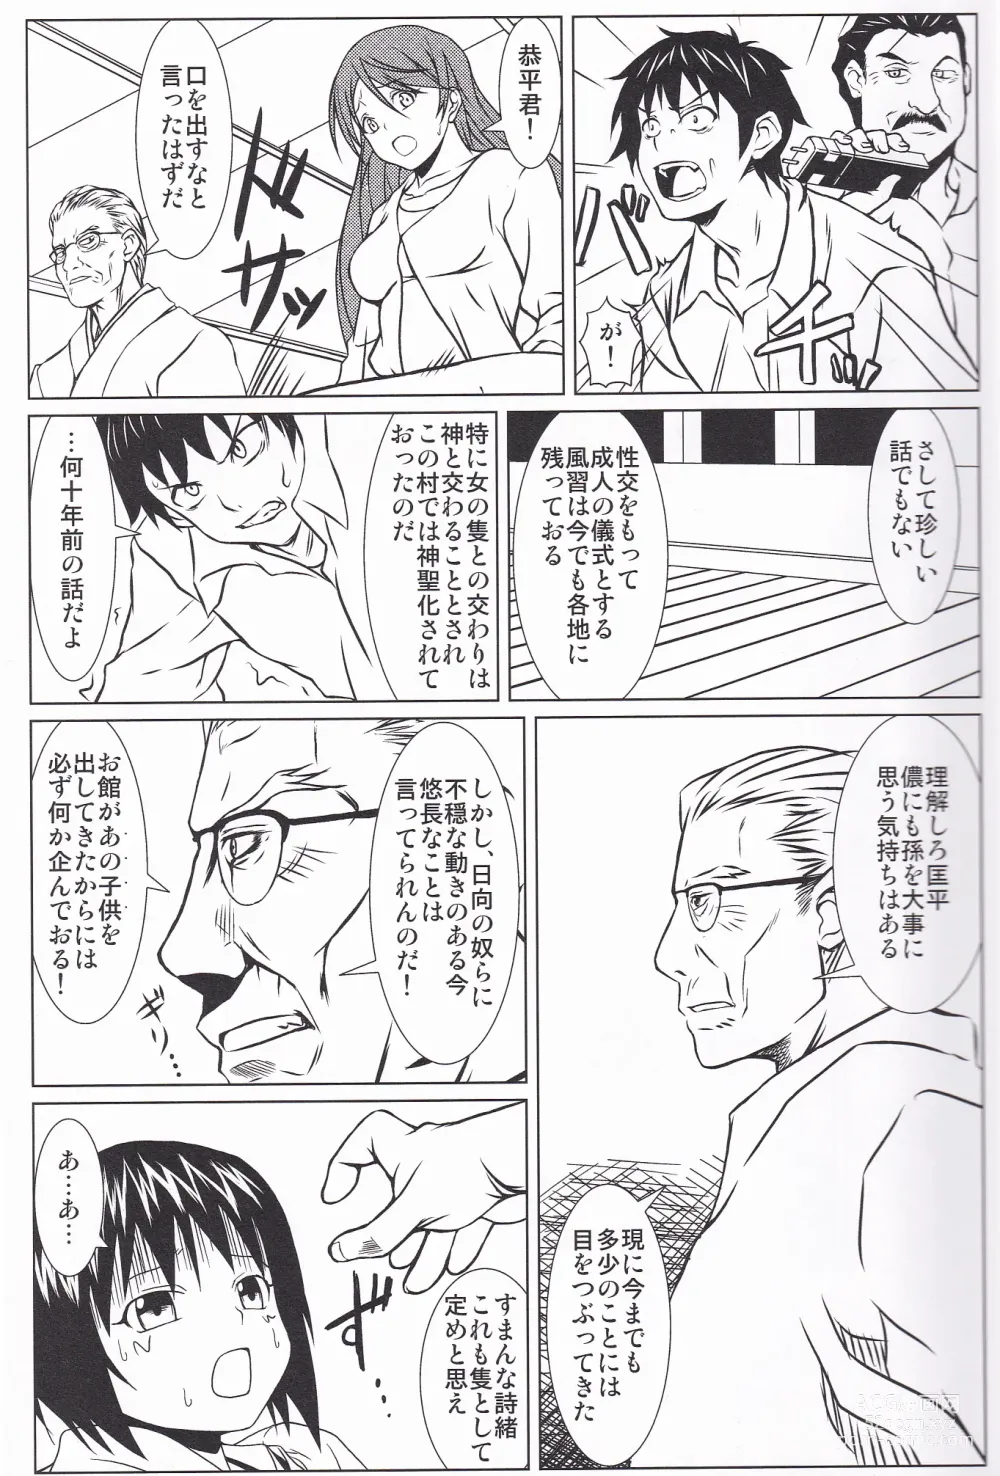 Page 4 of doujinshi Hibi no Uta